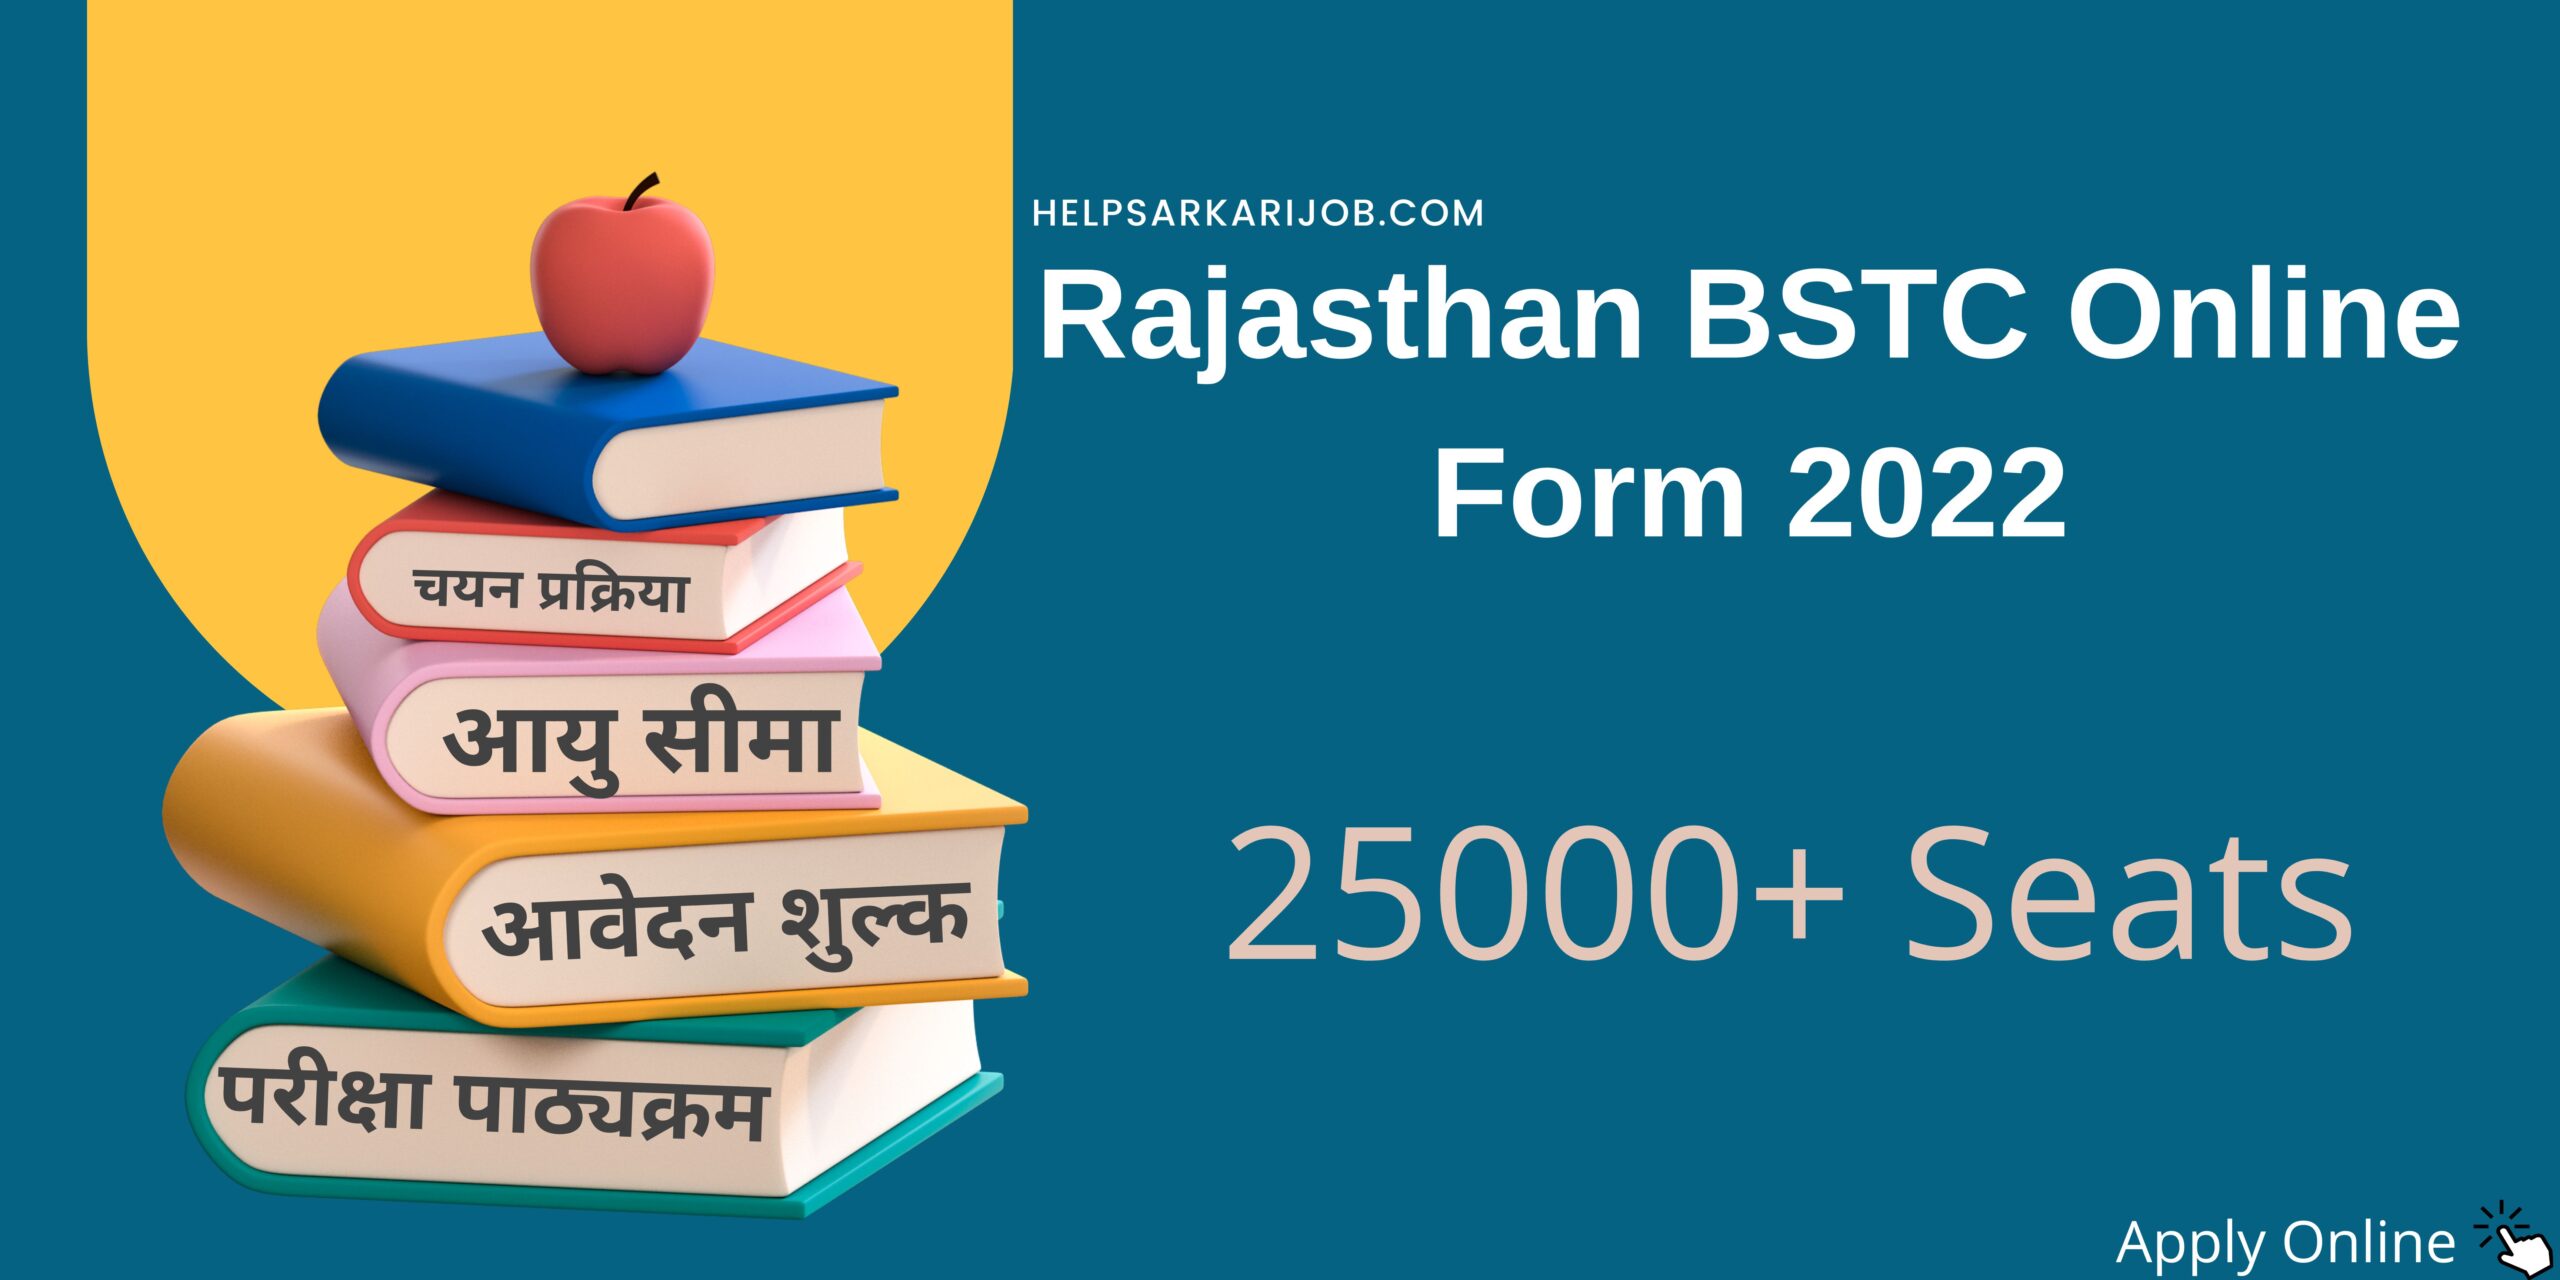 Rajasthan BSTC Online Form 2022